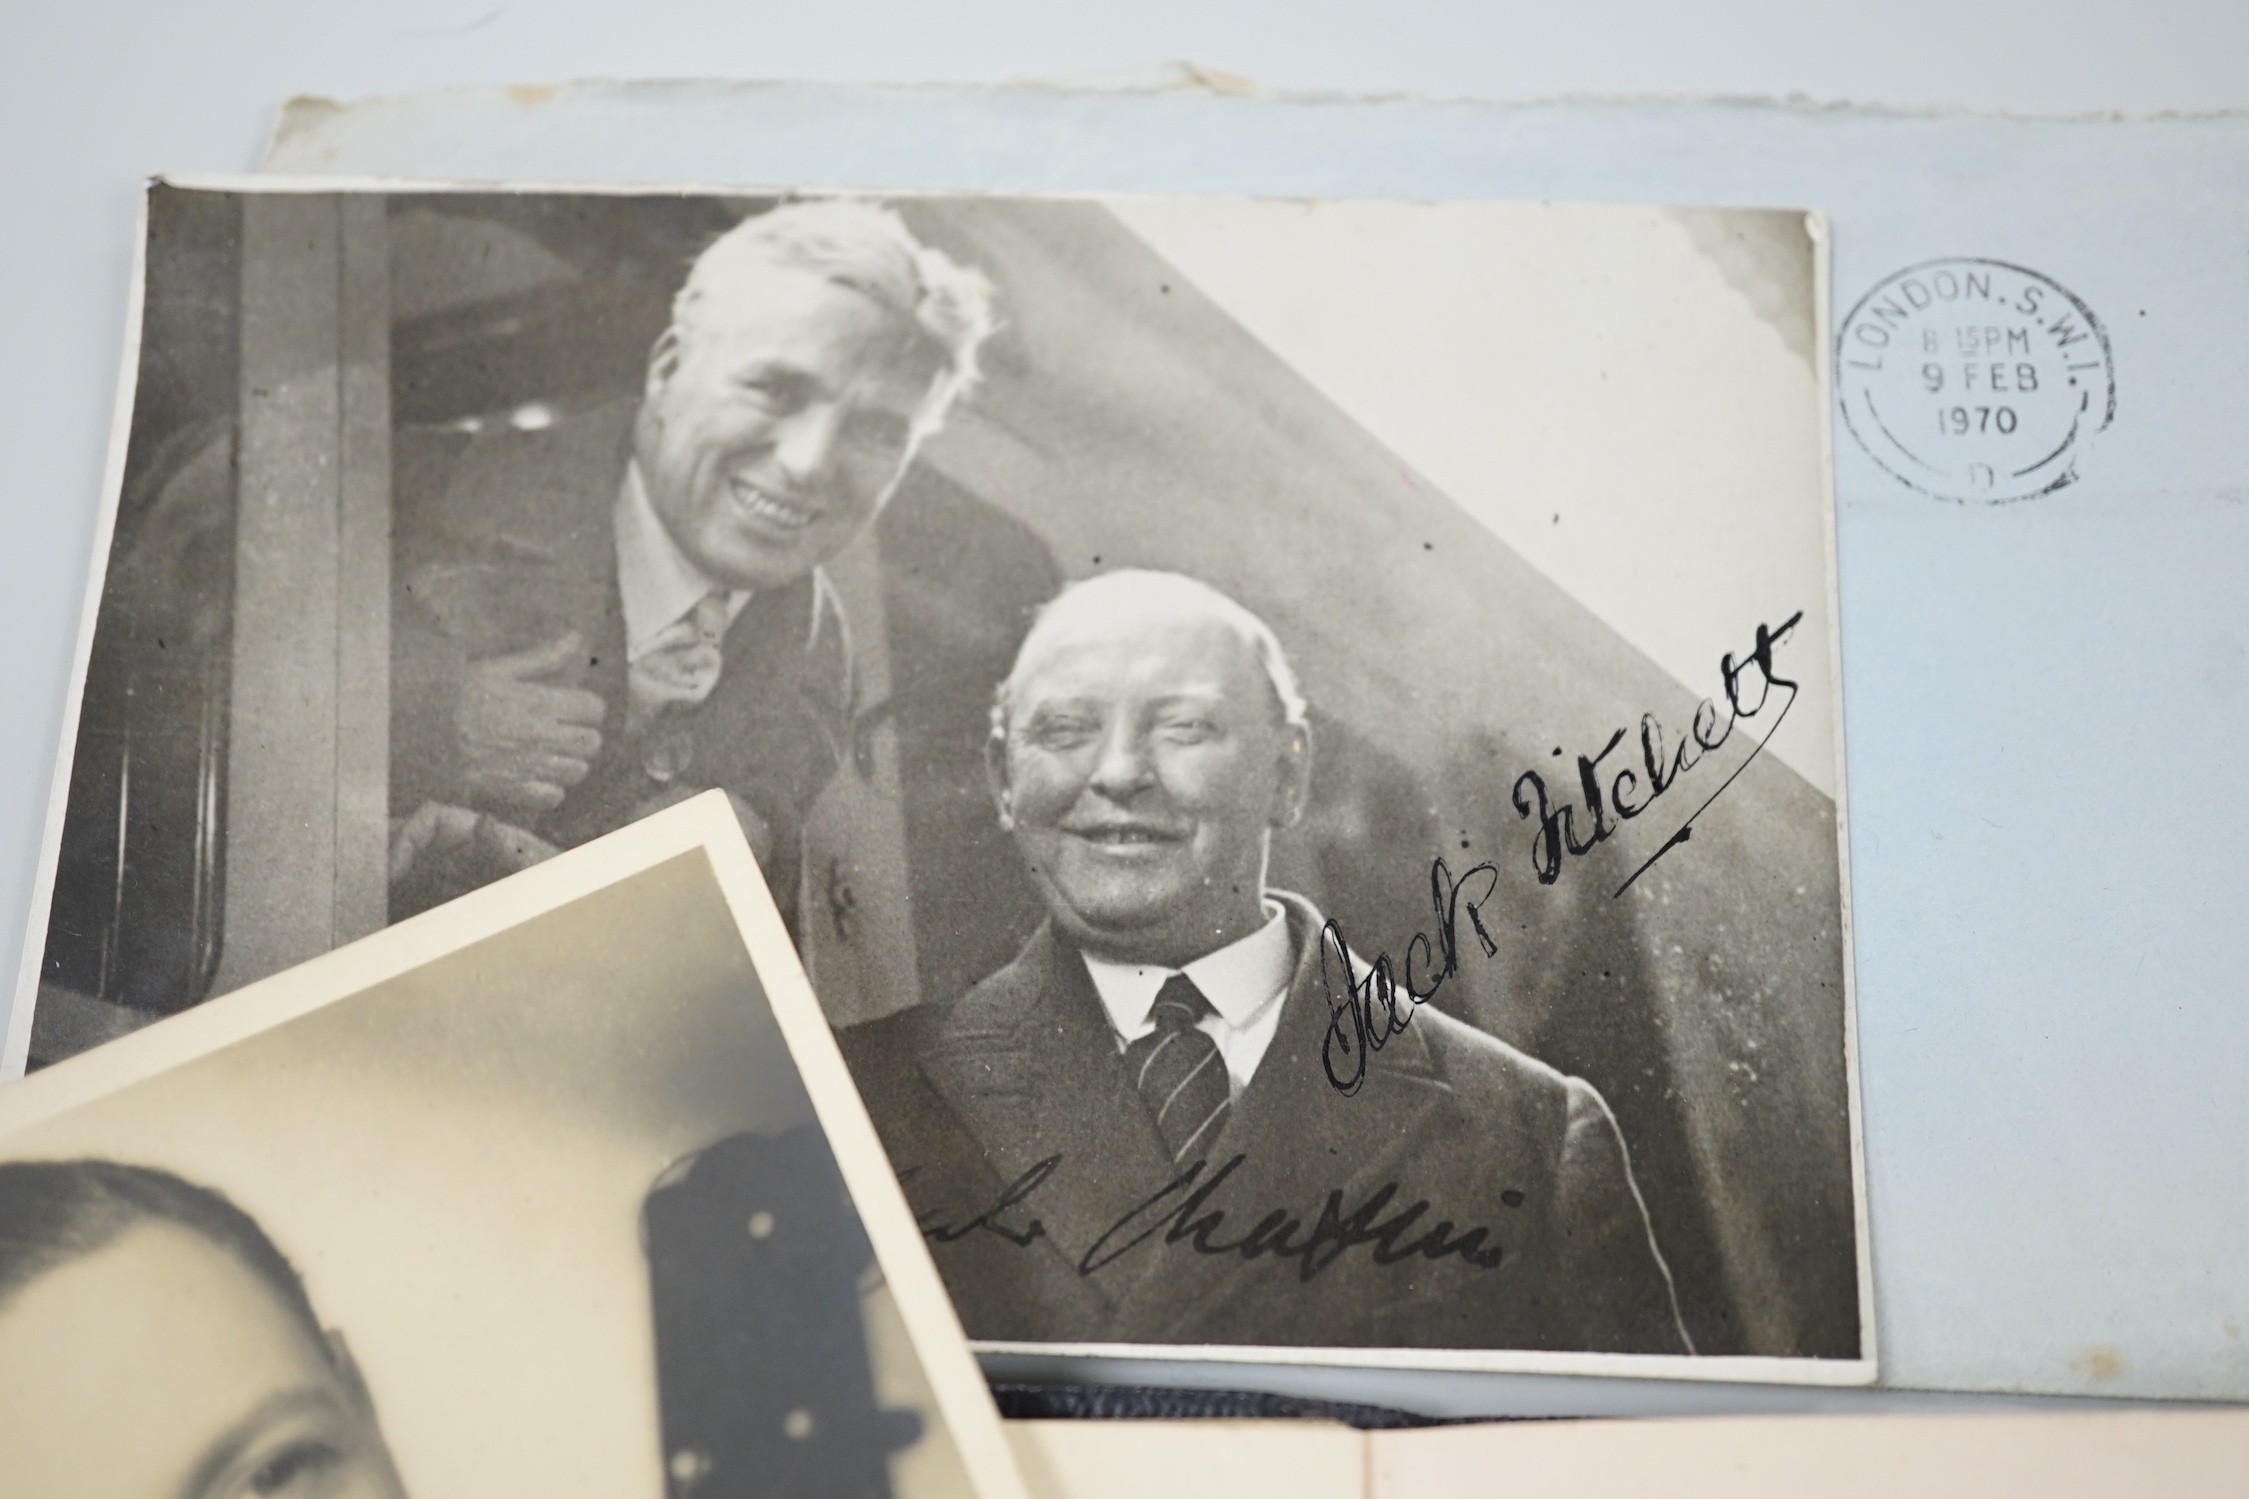 Mixed autographs including George Formby, 1938, Charlie Chaplin, Noel Coward